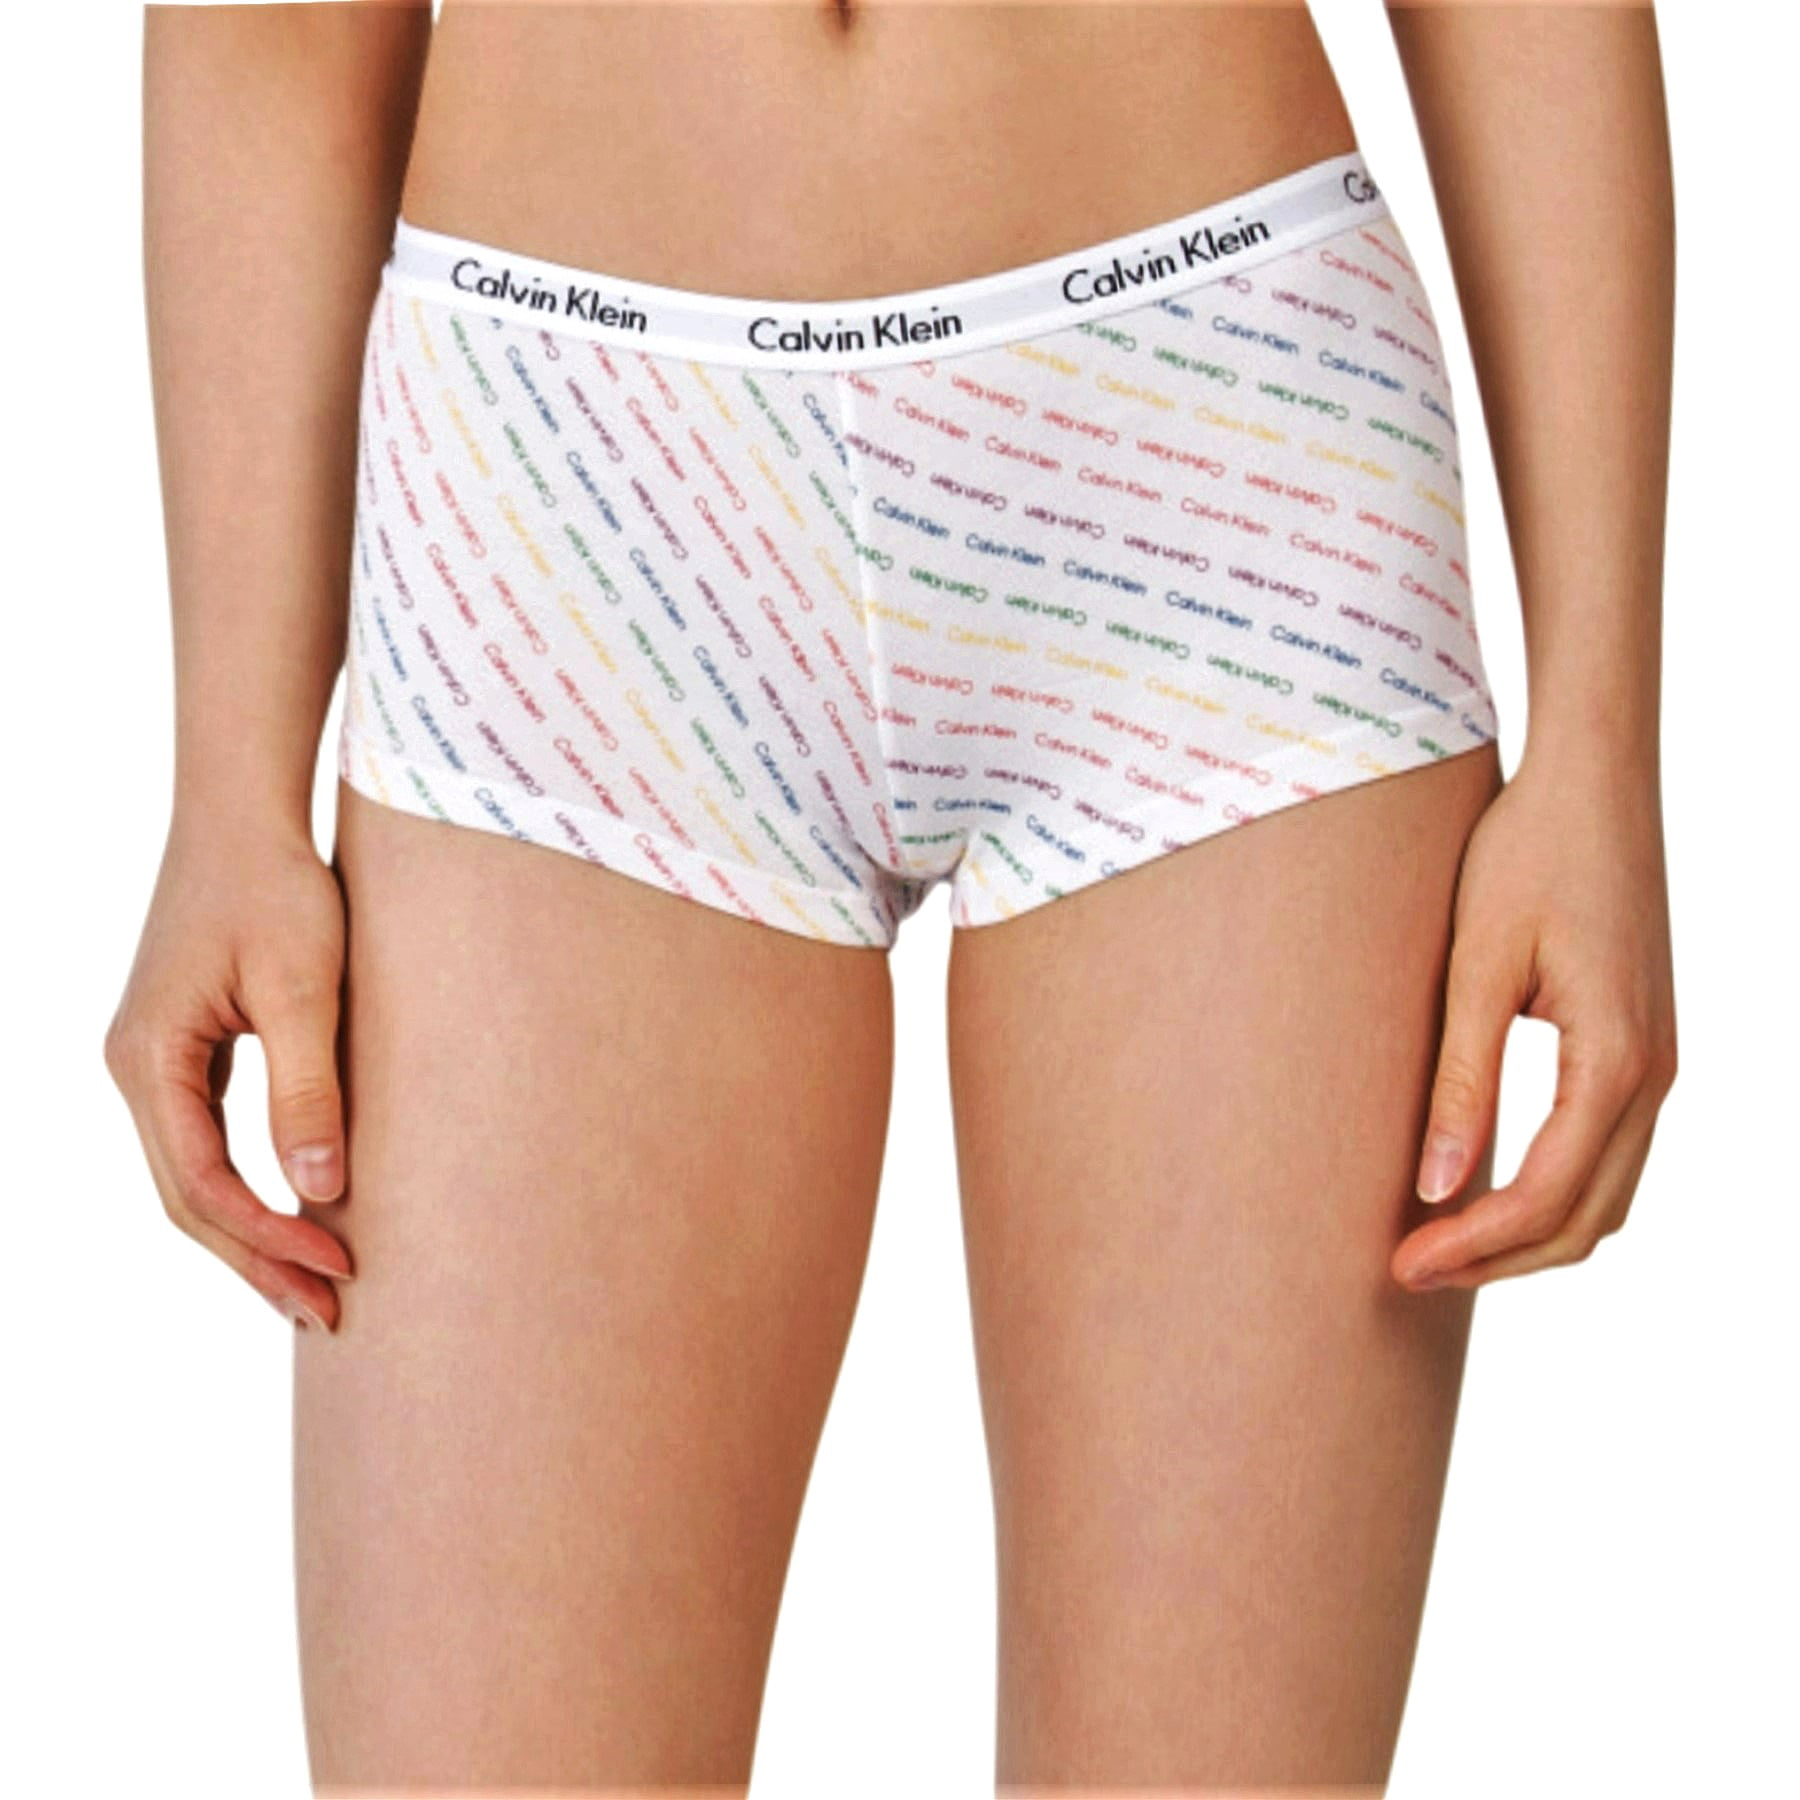 Soft Colorful Logo Calvin Rainbow Print Cotton Blend Women\'s Klein Boyshorts Panties